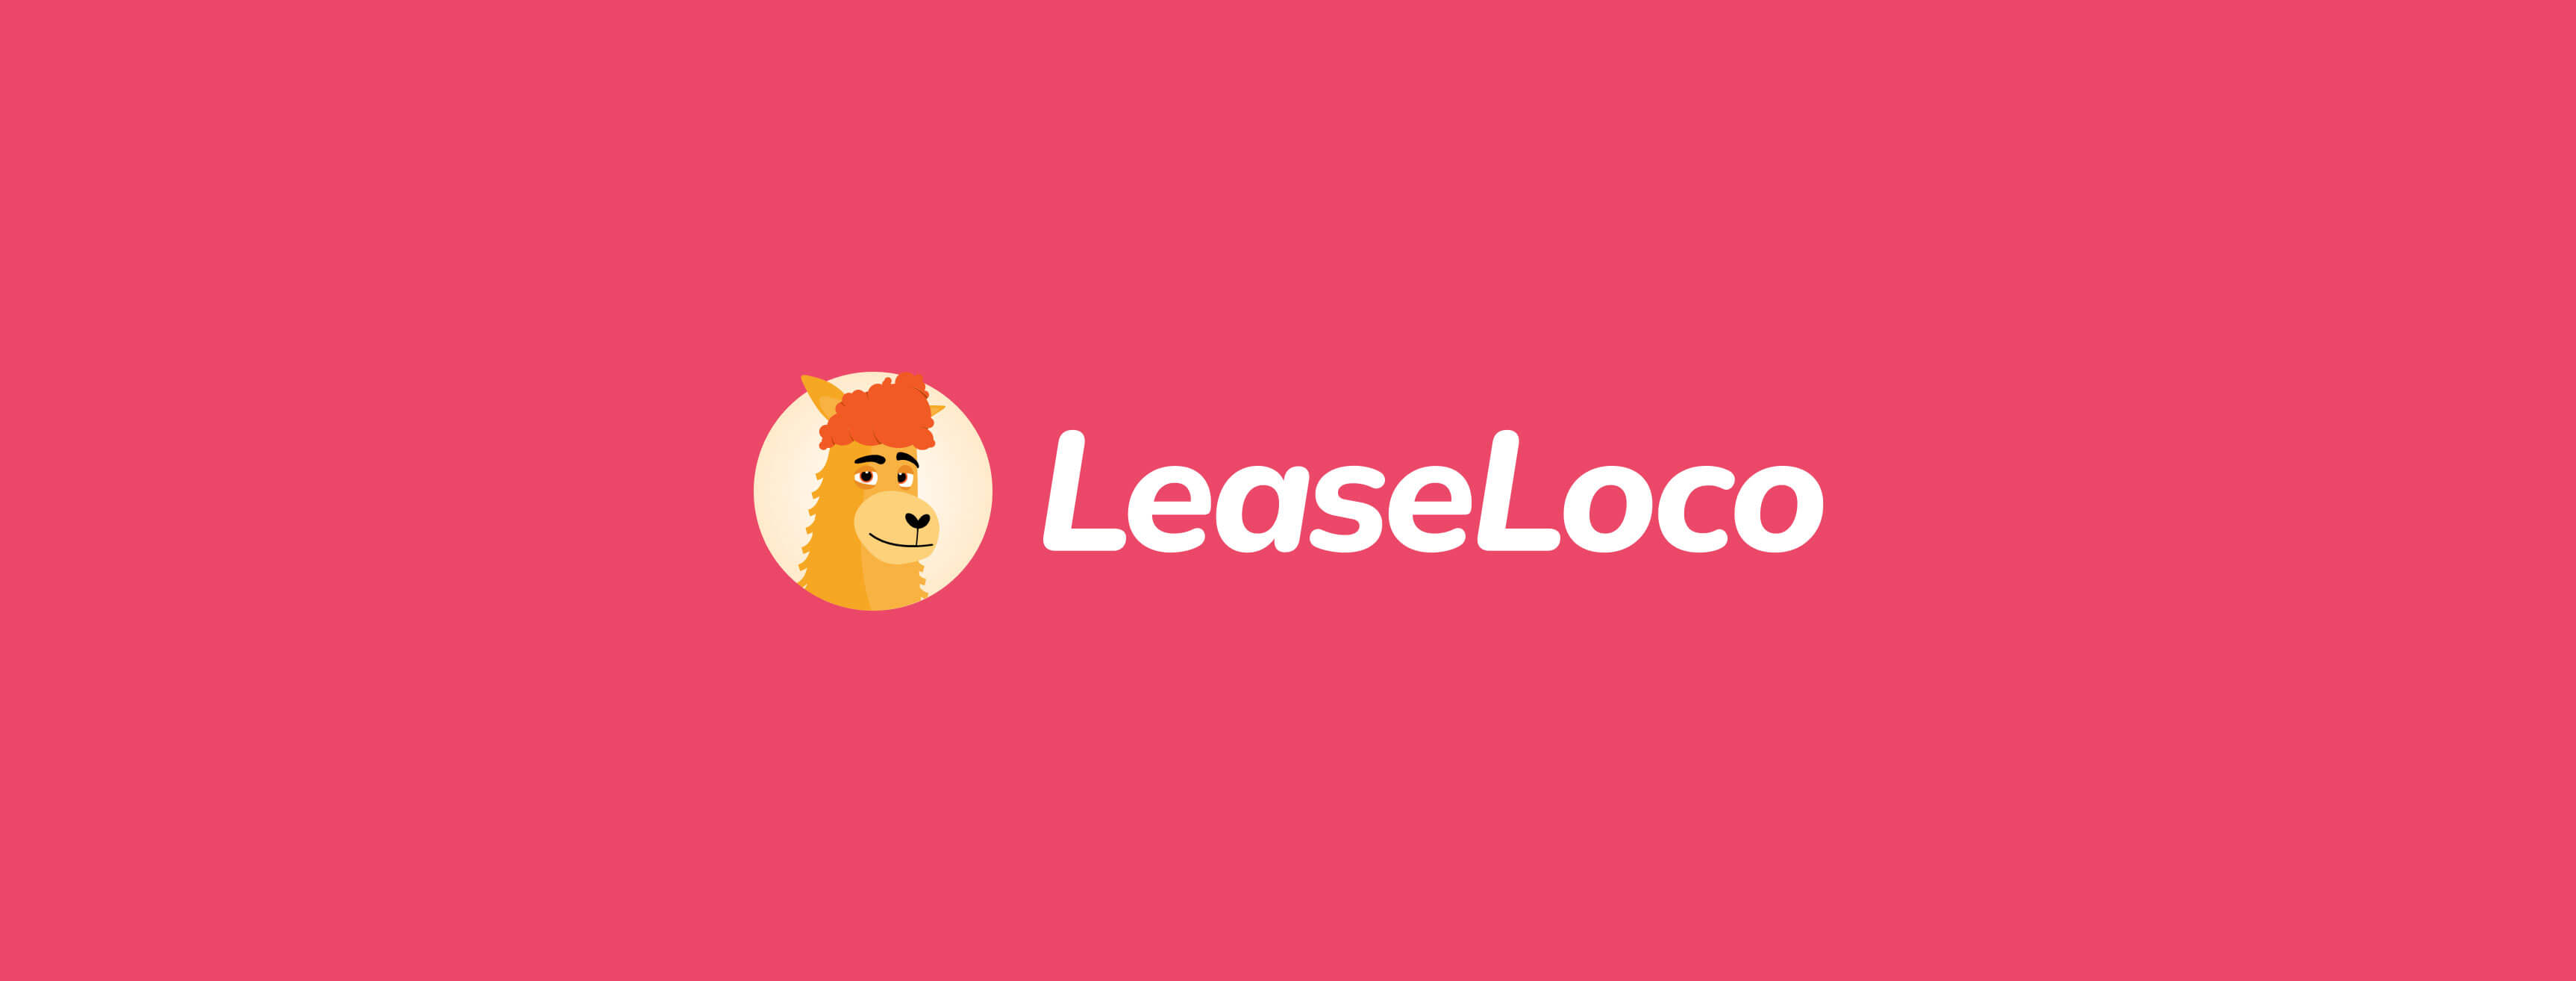 www.leaseloco.com